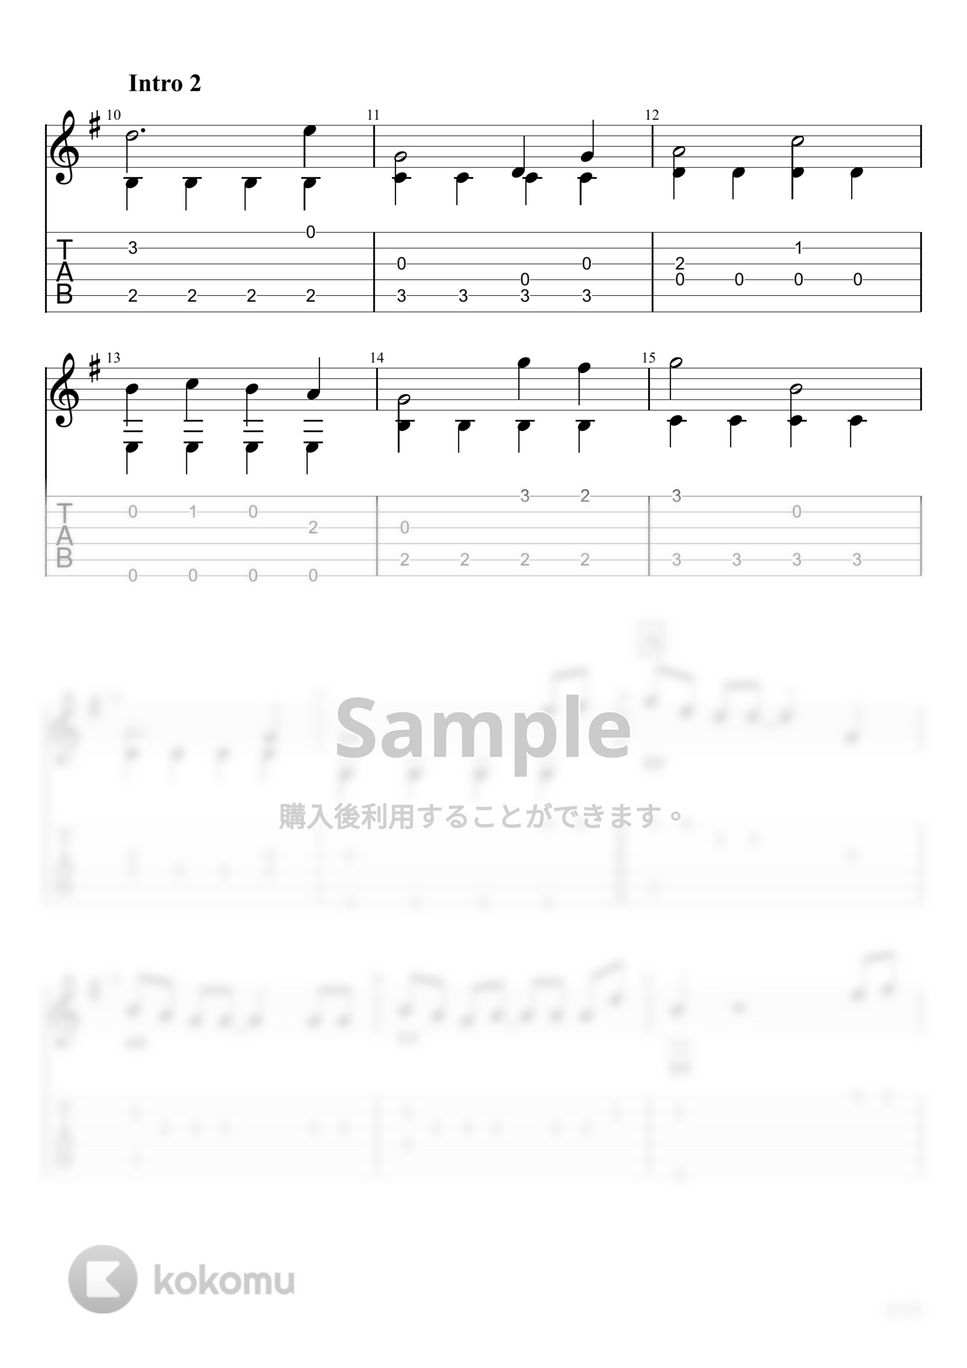 HoneyWorks - 誇り高きアイドル (ソロギター) by u3danchou